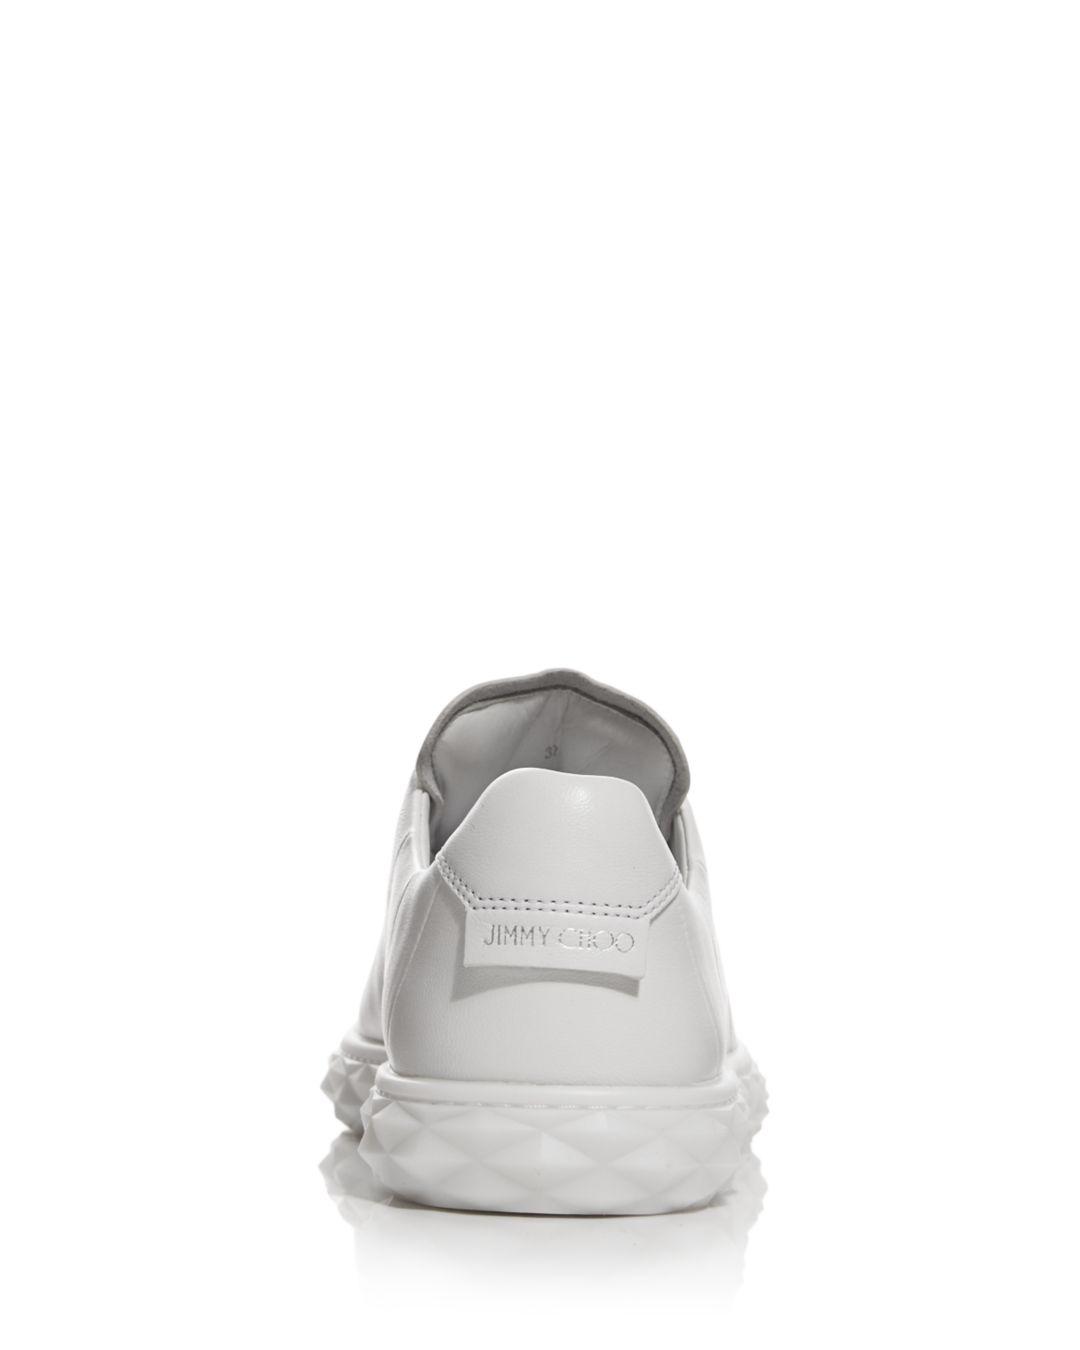 Jimmy Choo Leather Diamond Light Sneakers in White - Lyst